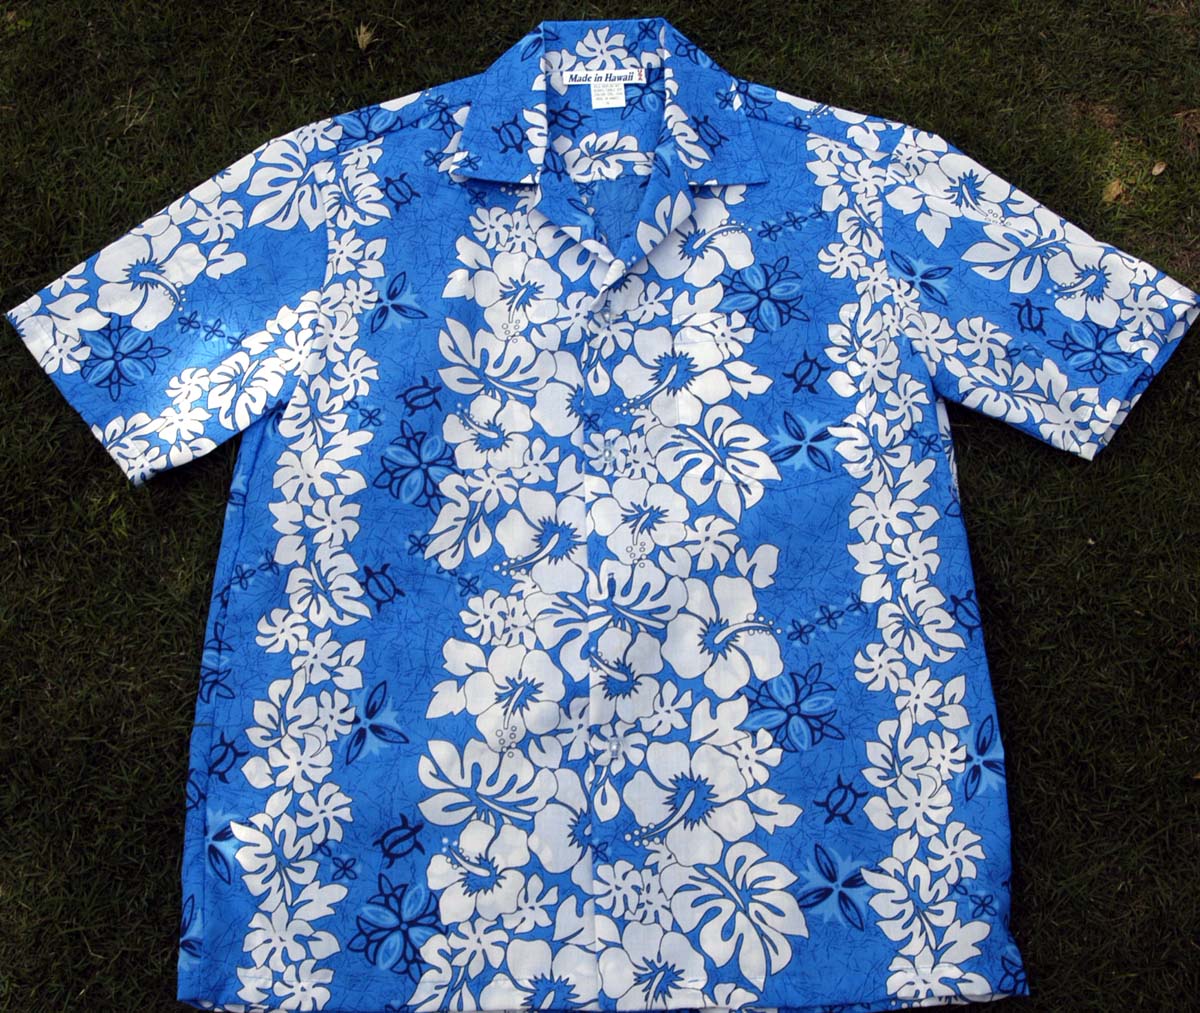 Blue/ white flower shirts